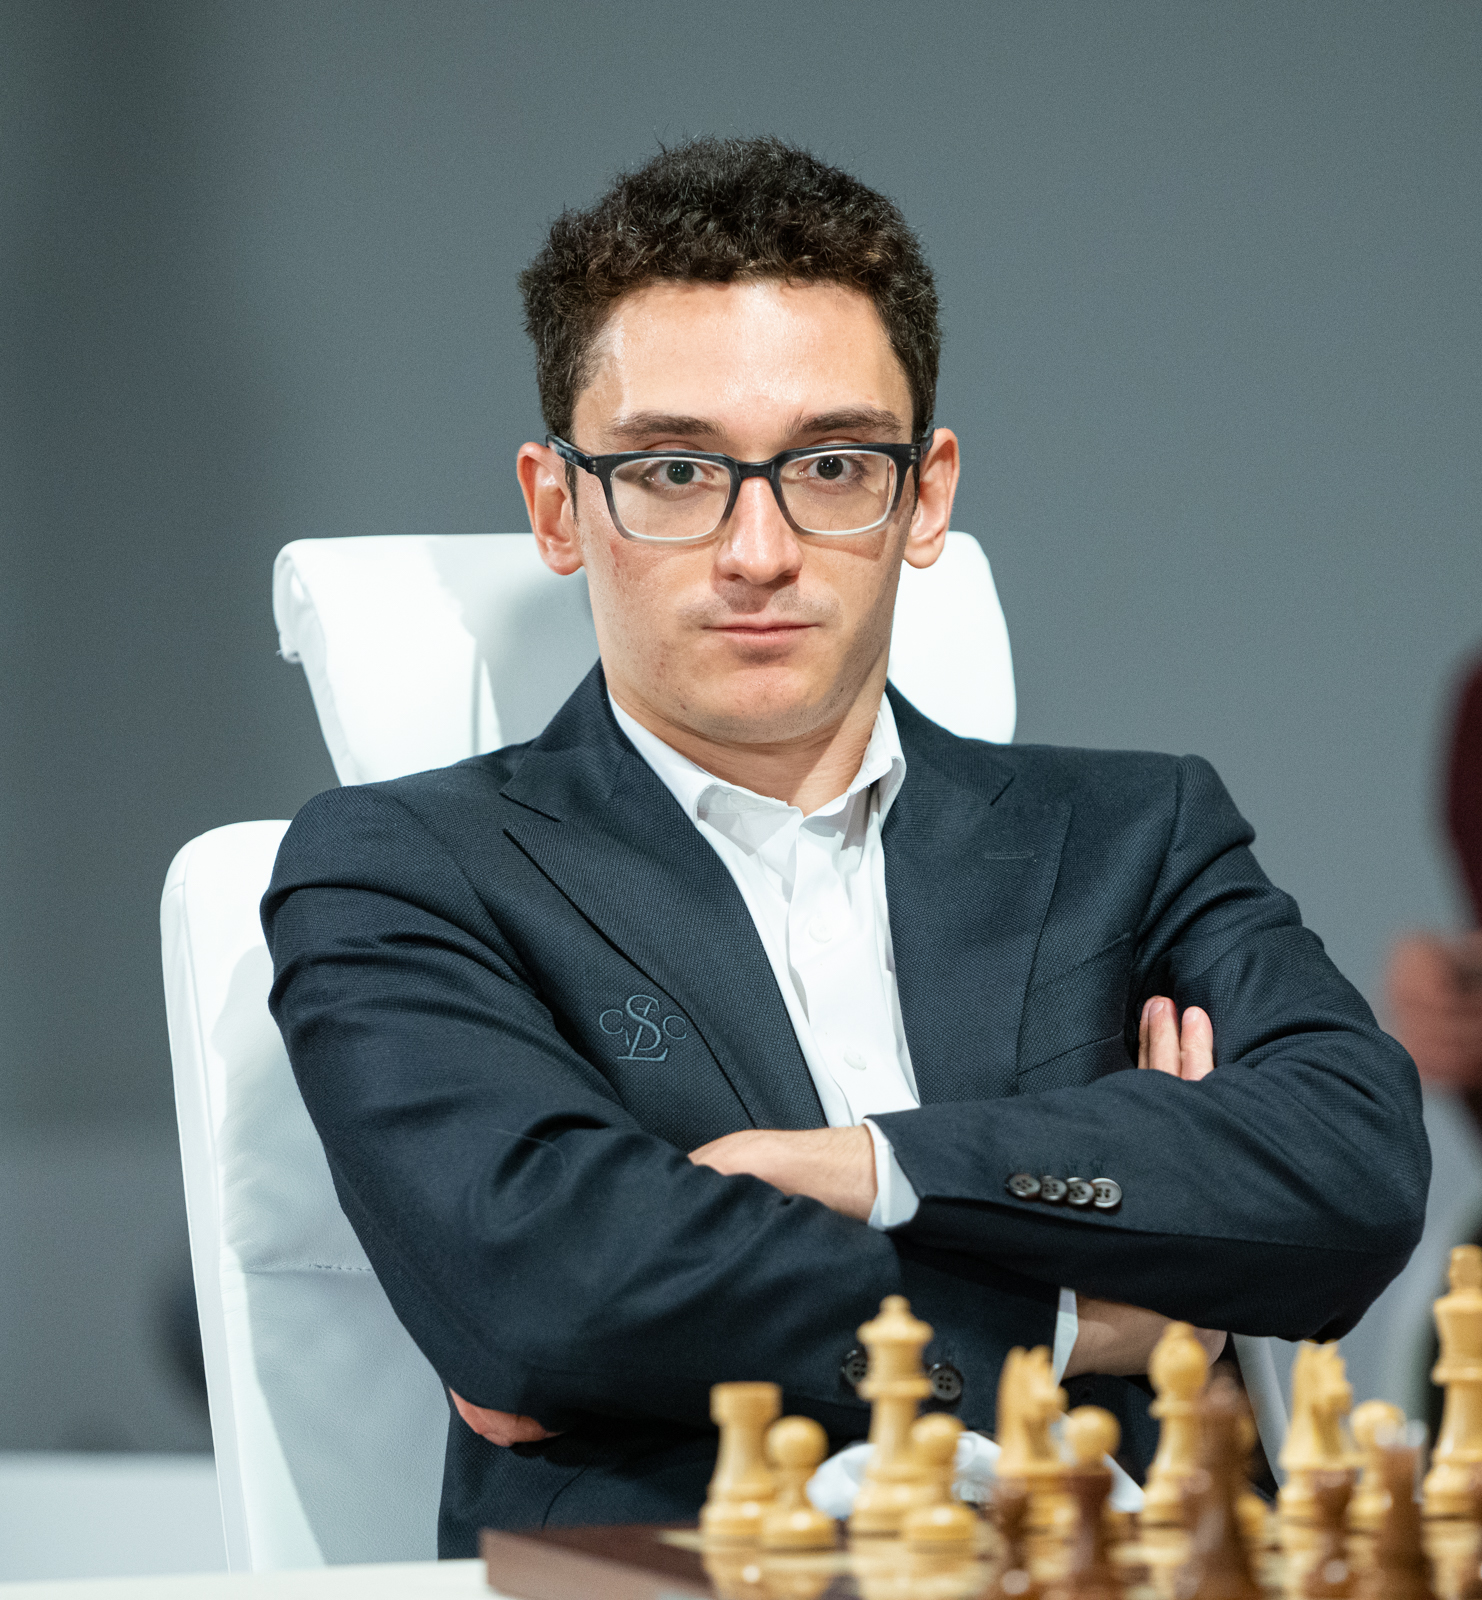 Fabiano Caruana (Chess Player) - Age, Birthday, Bio, Facts, Family, Net  Worth, Height & More